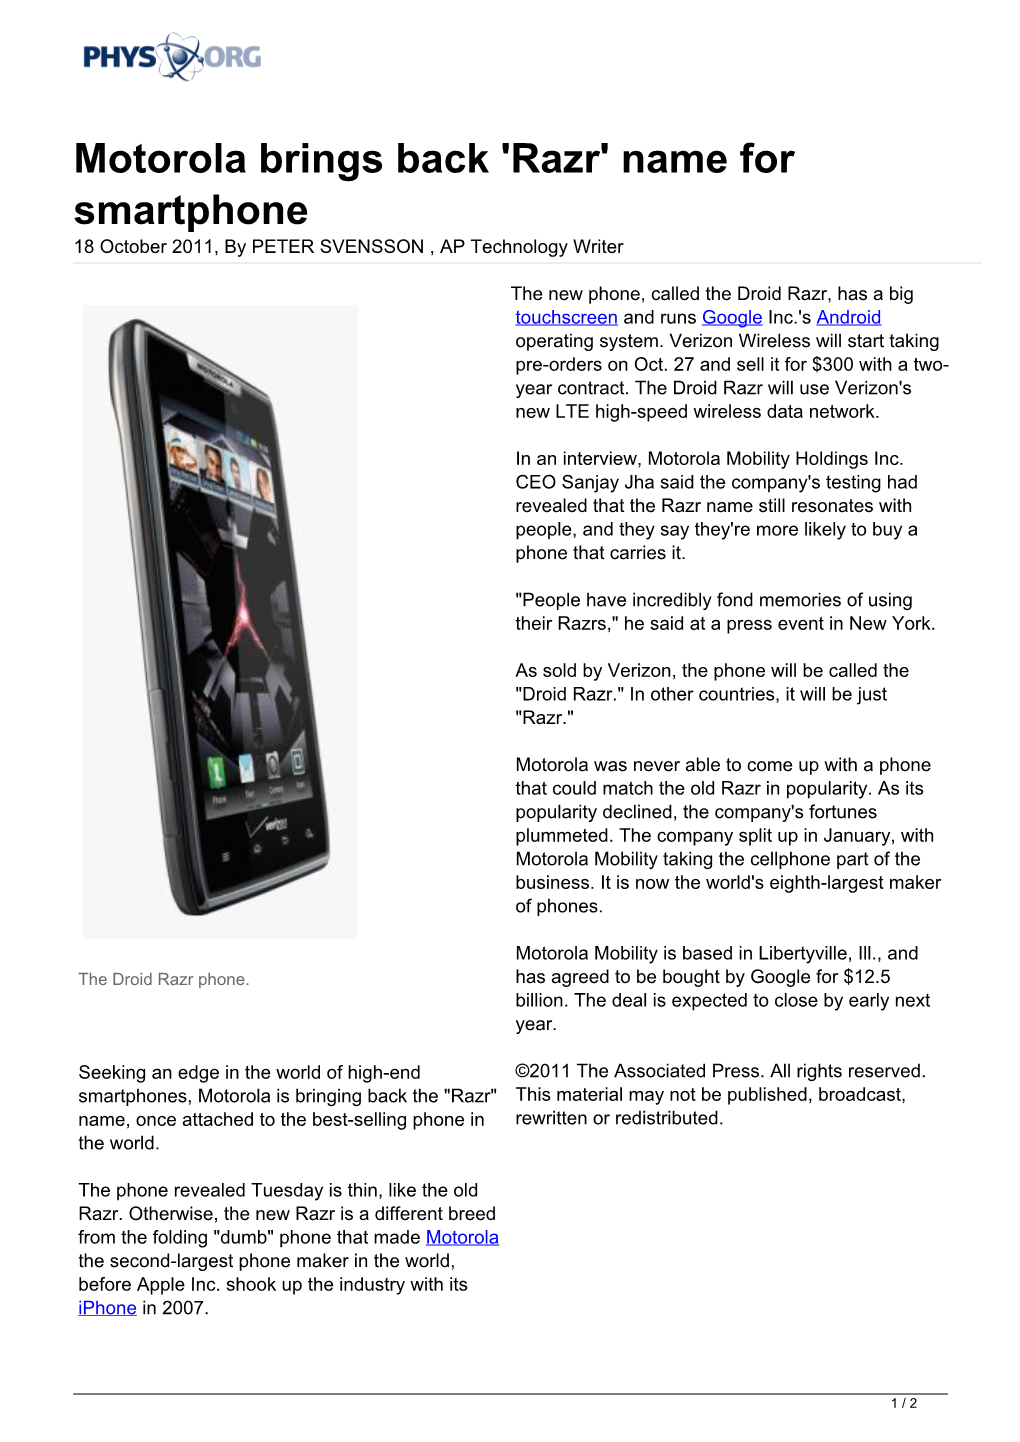 Motorola Brings Back 'Razr' Name for Smartphone 18 October 2011, by PETER SVENSSON , AP Technology Writer